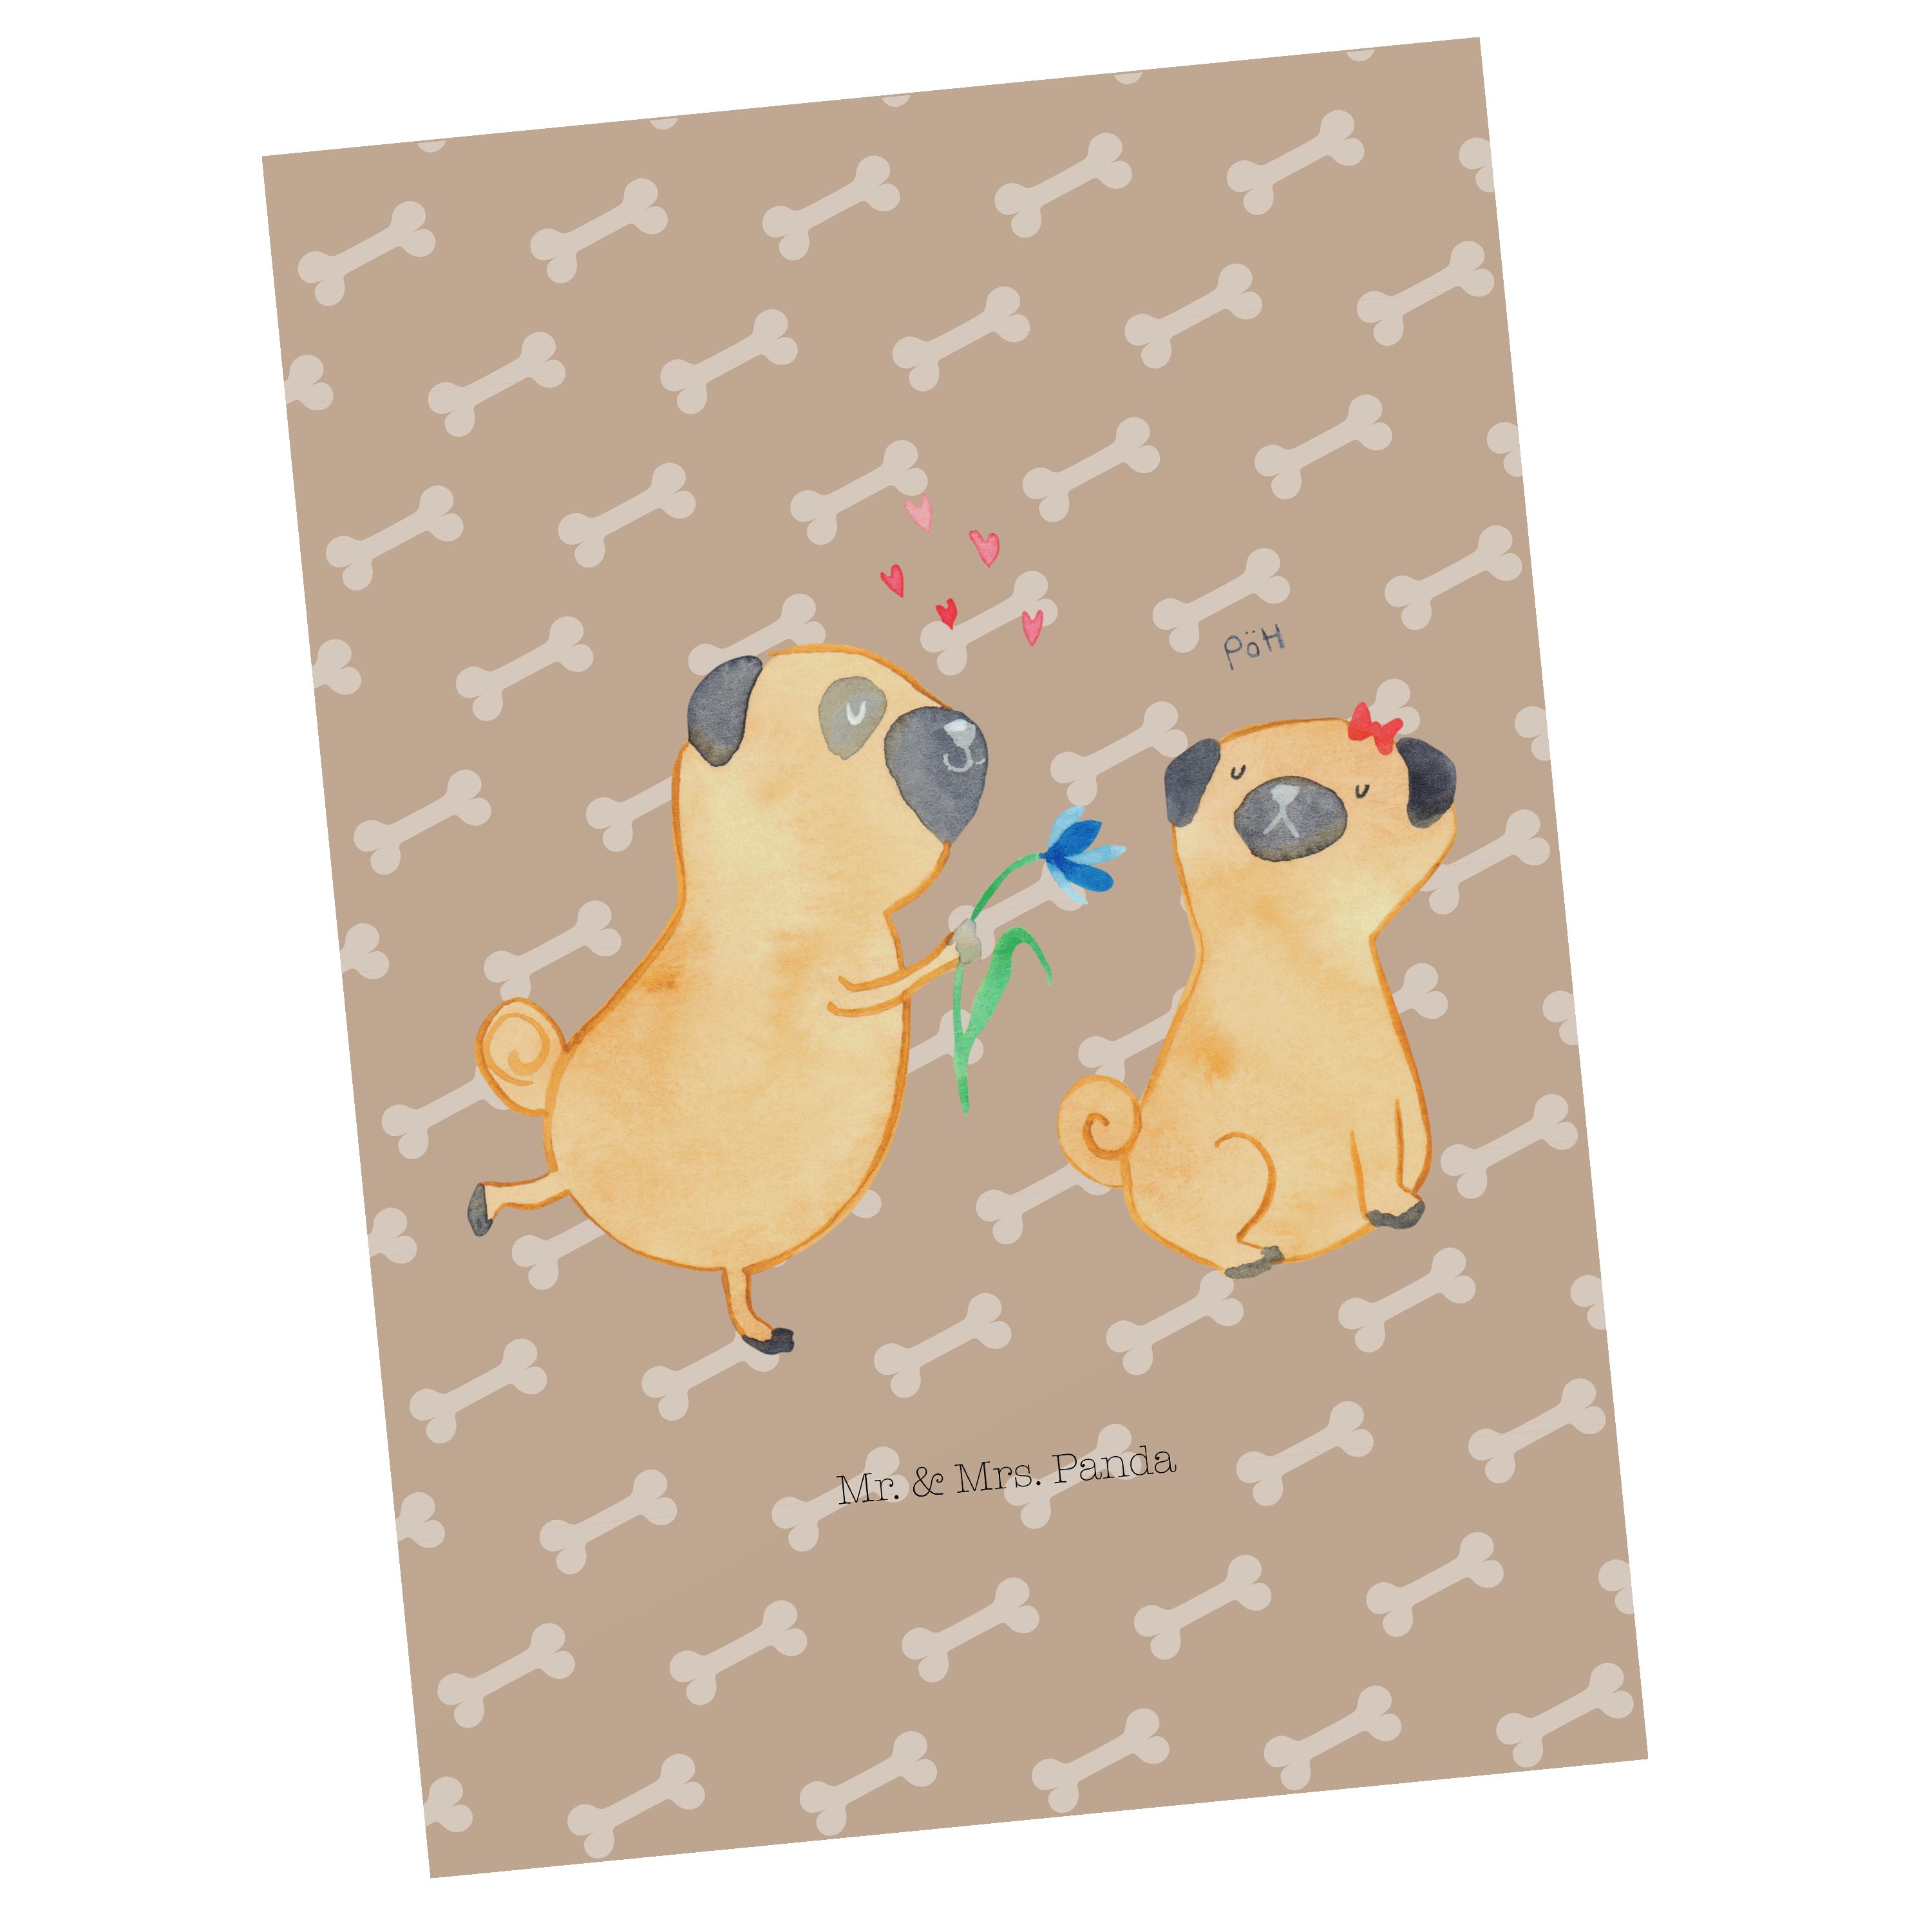 Mr. & Mrs. Panda Postkarte Mops verliebt - Hundeglück - Geschenk, Ansichtskarte, Hundemotiv, Lie